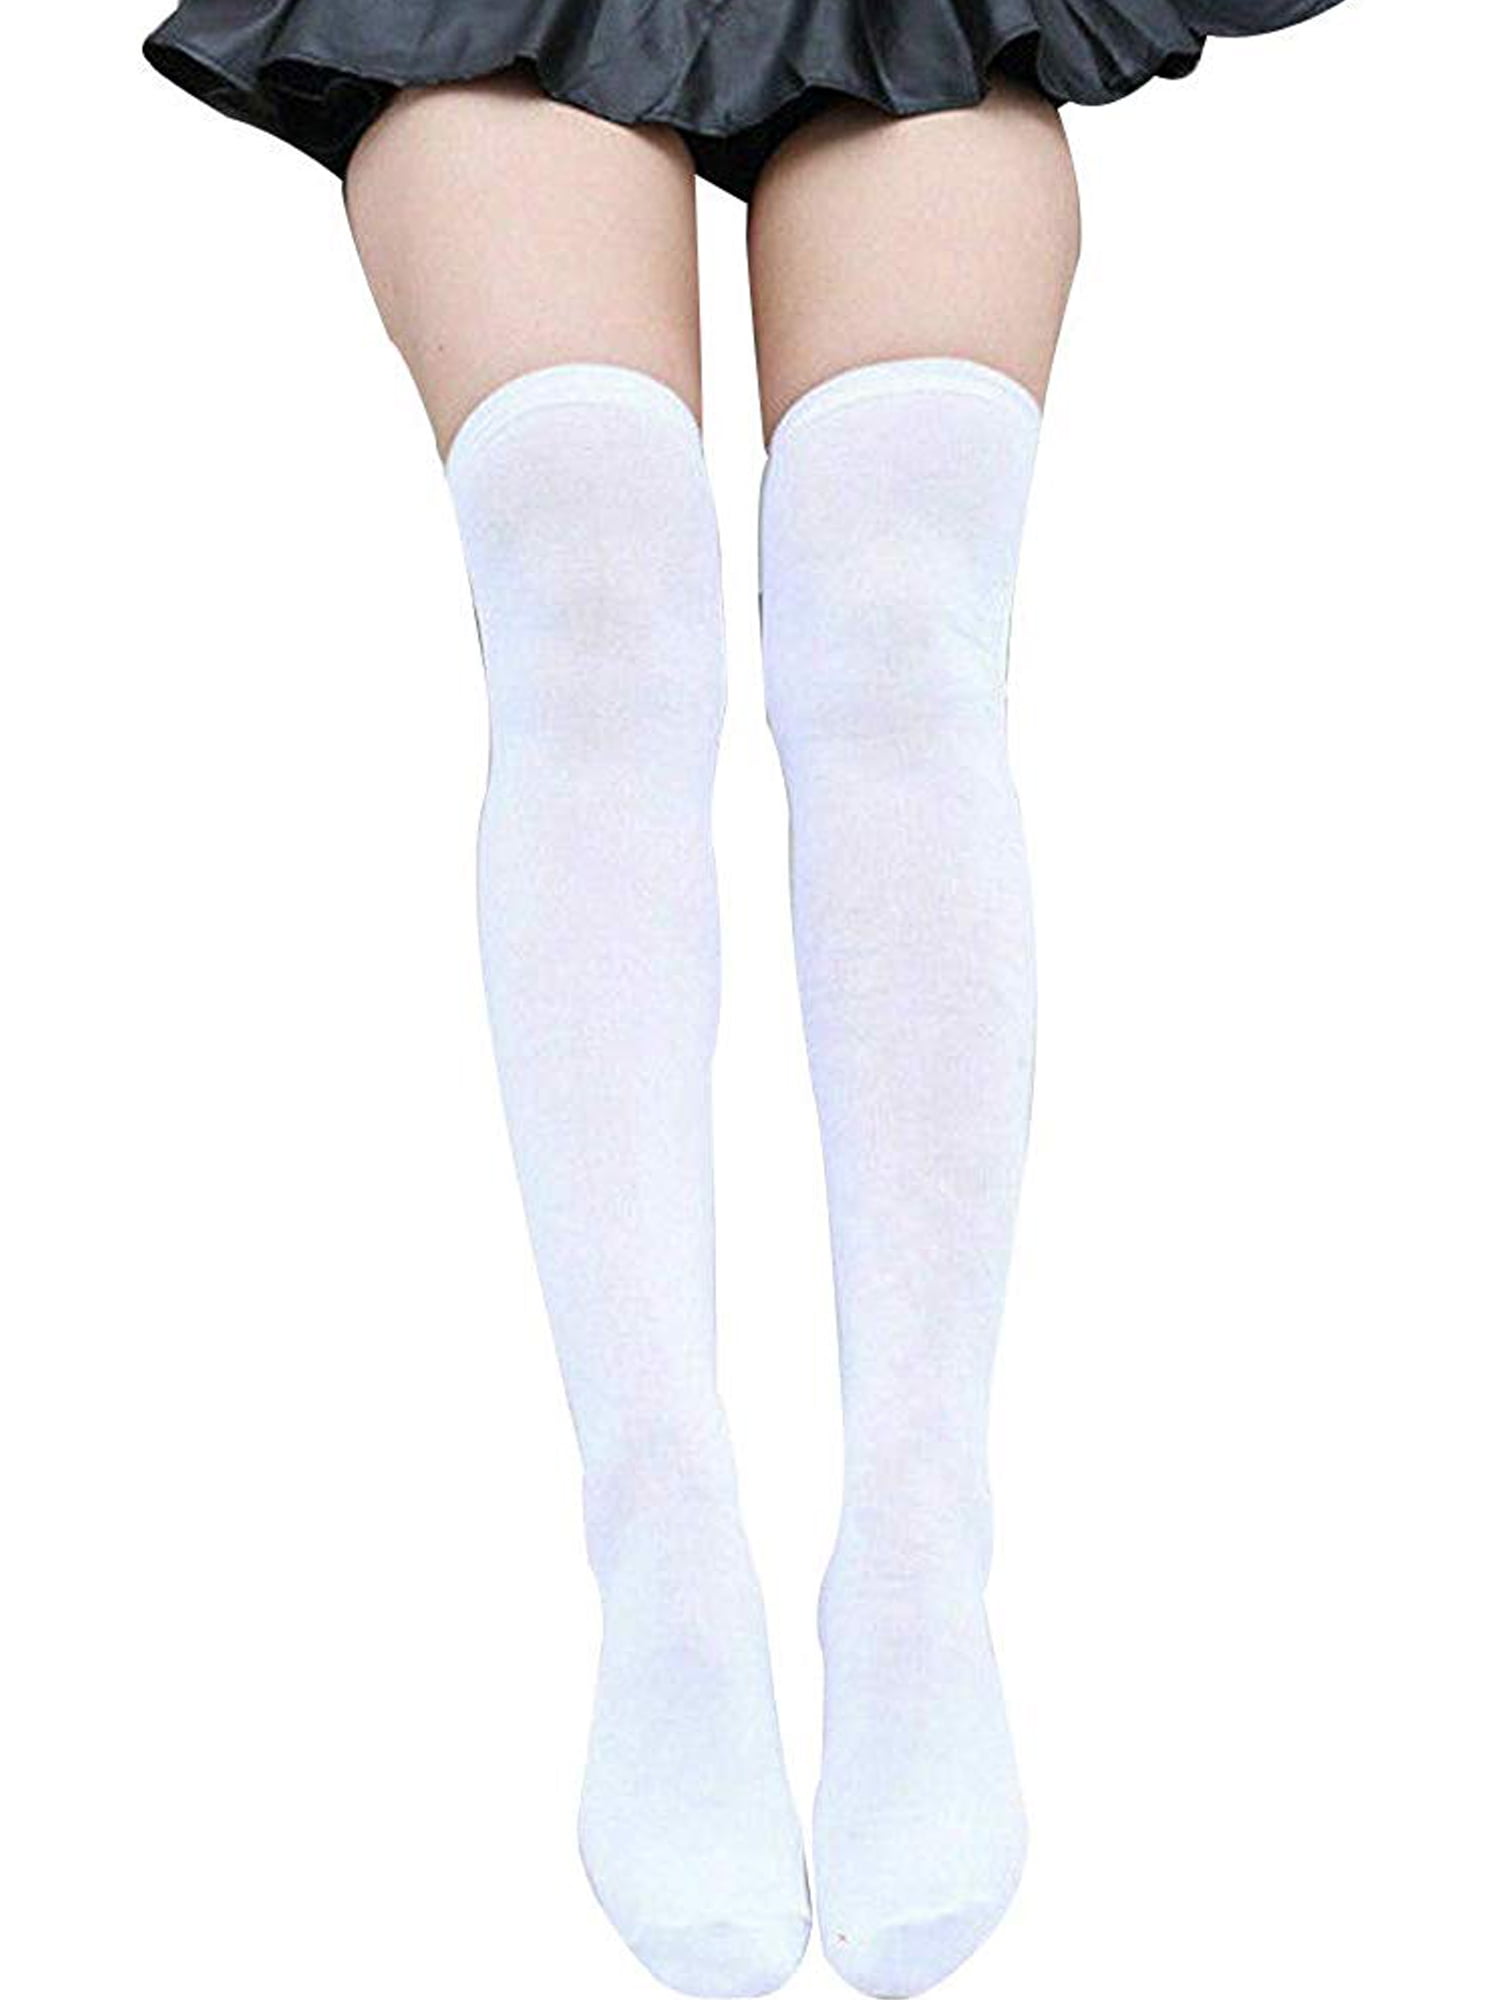 Swyss Women Thigh High Over KNEE Socks Long Cotton Stockings Leg Warmer For Teen Girls Ladies 